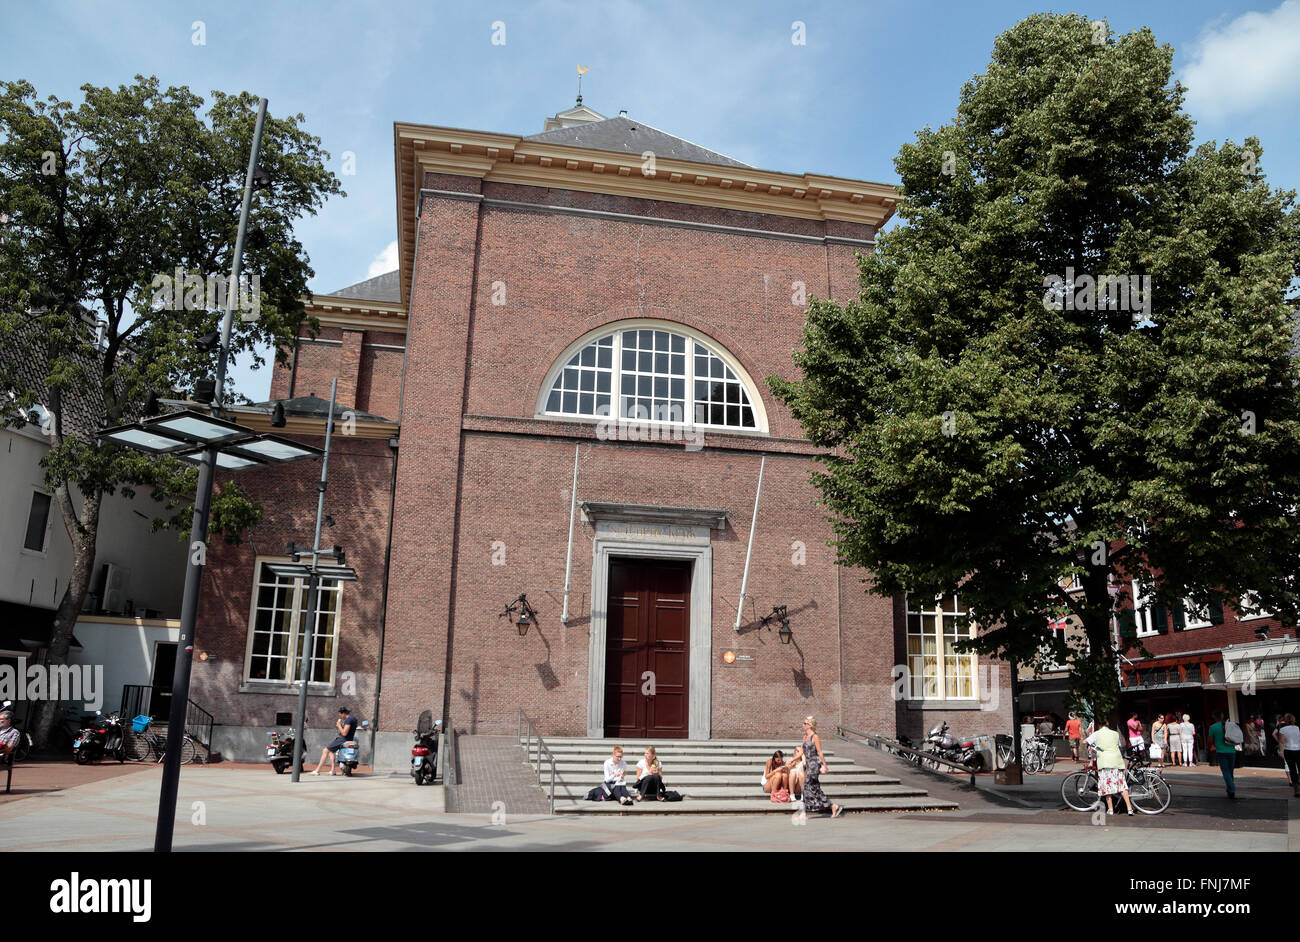 The De Nederlands Hervormde kerk (Dutch Reformed Church) in Den Bosch, Netherlands. Stock Photo